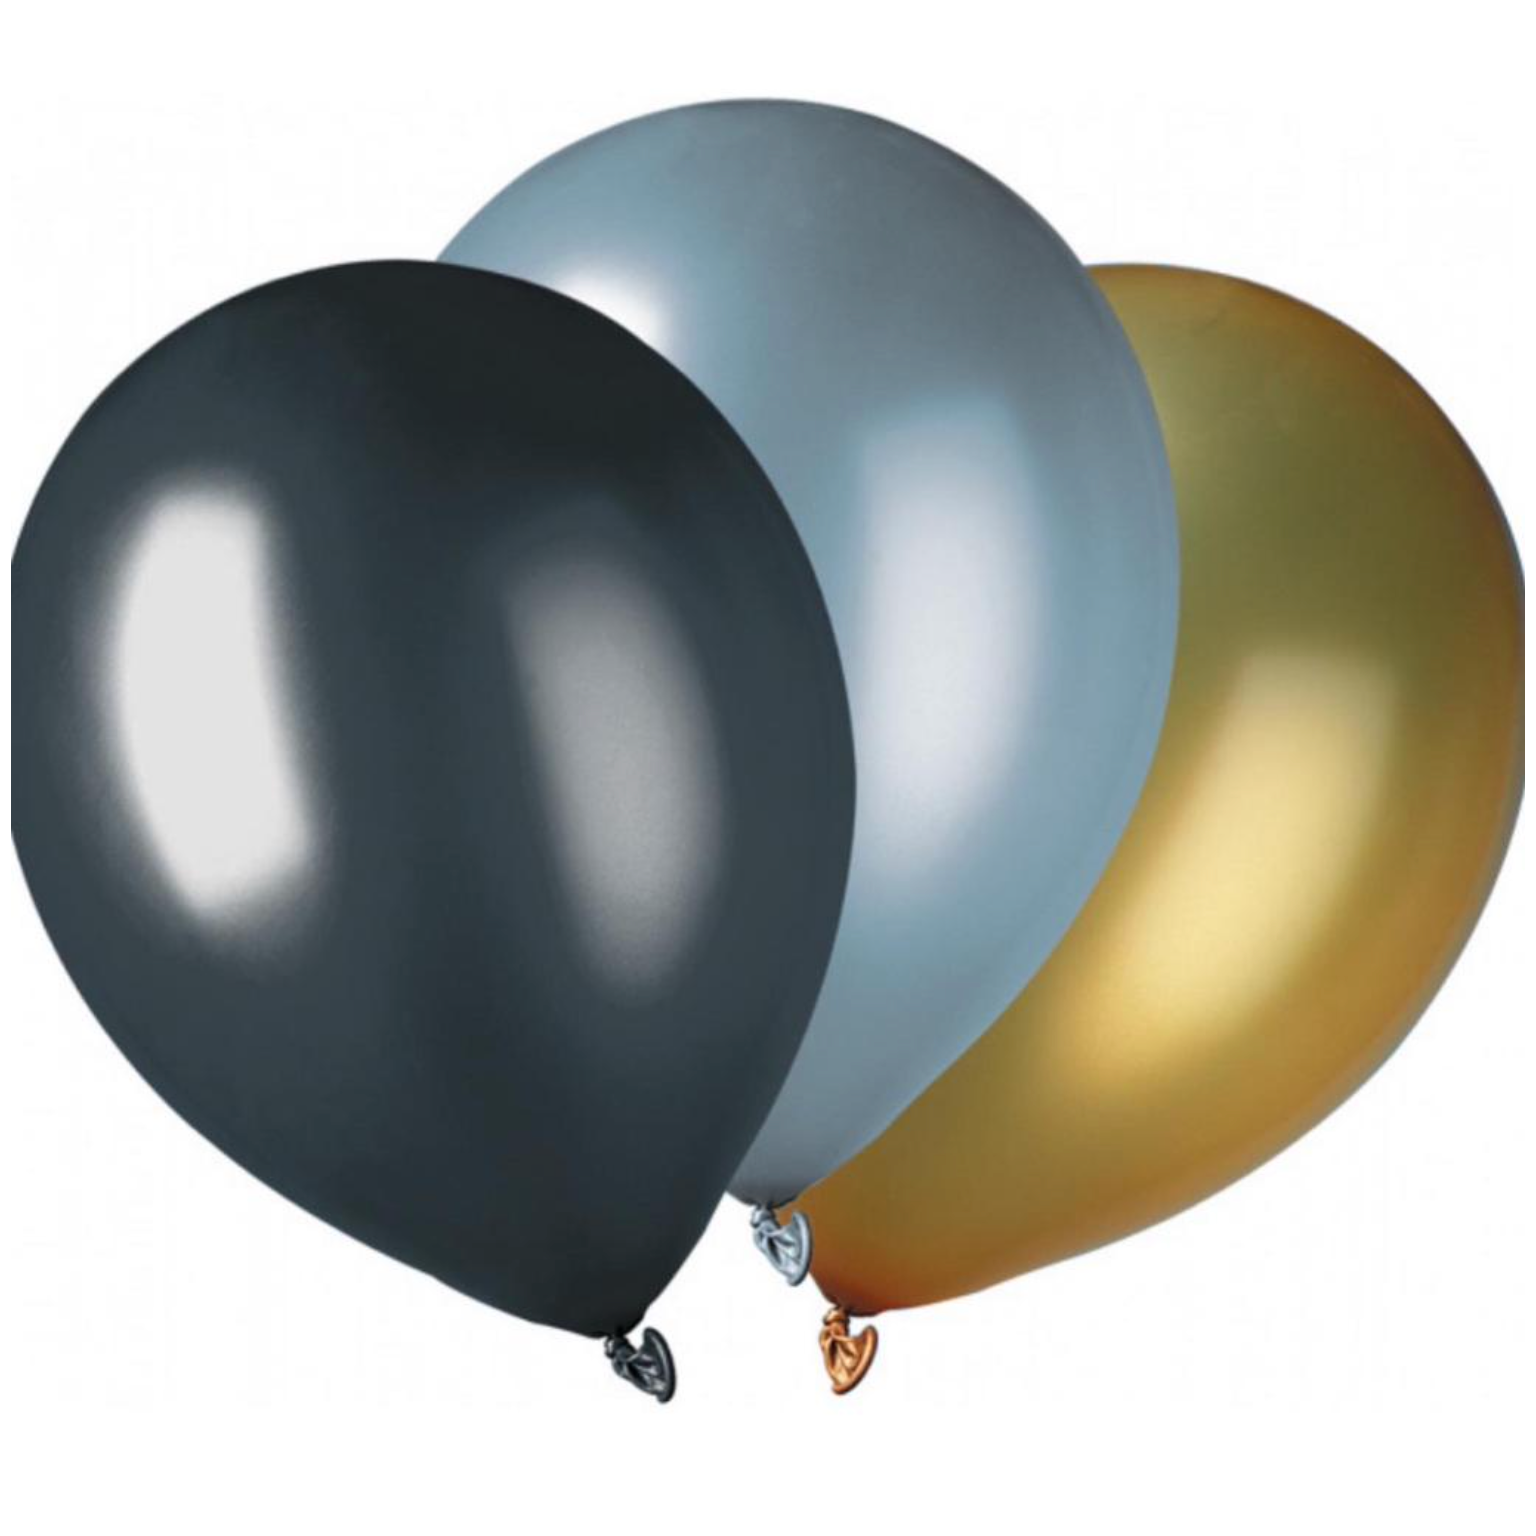 Inzichtelijk dilemma Kaliber Helium ballon – Ballonnen van Eef